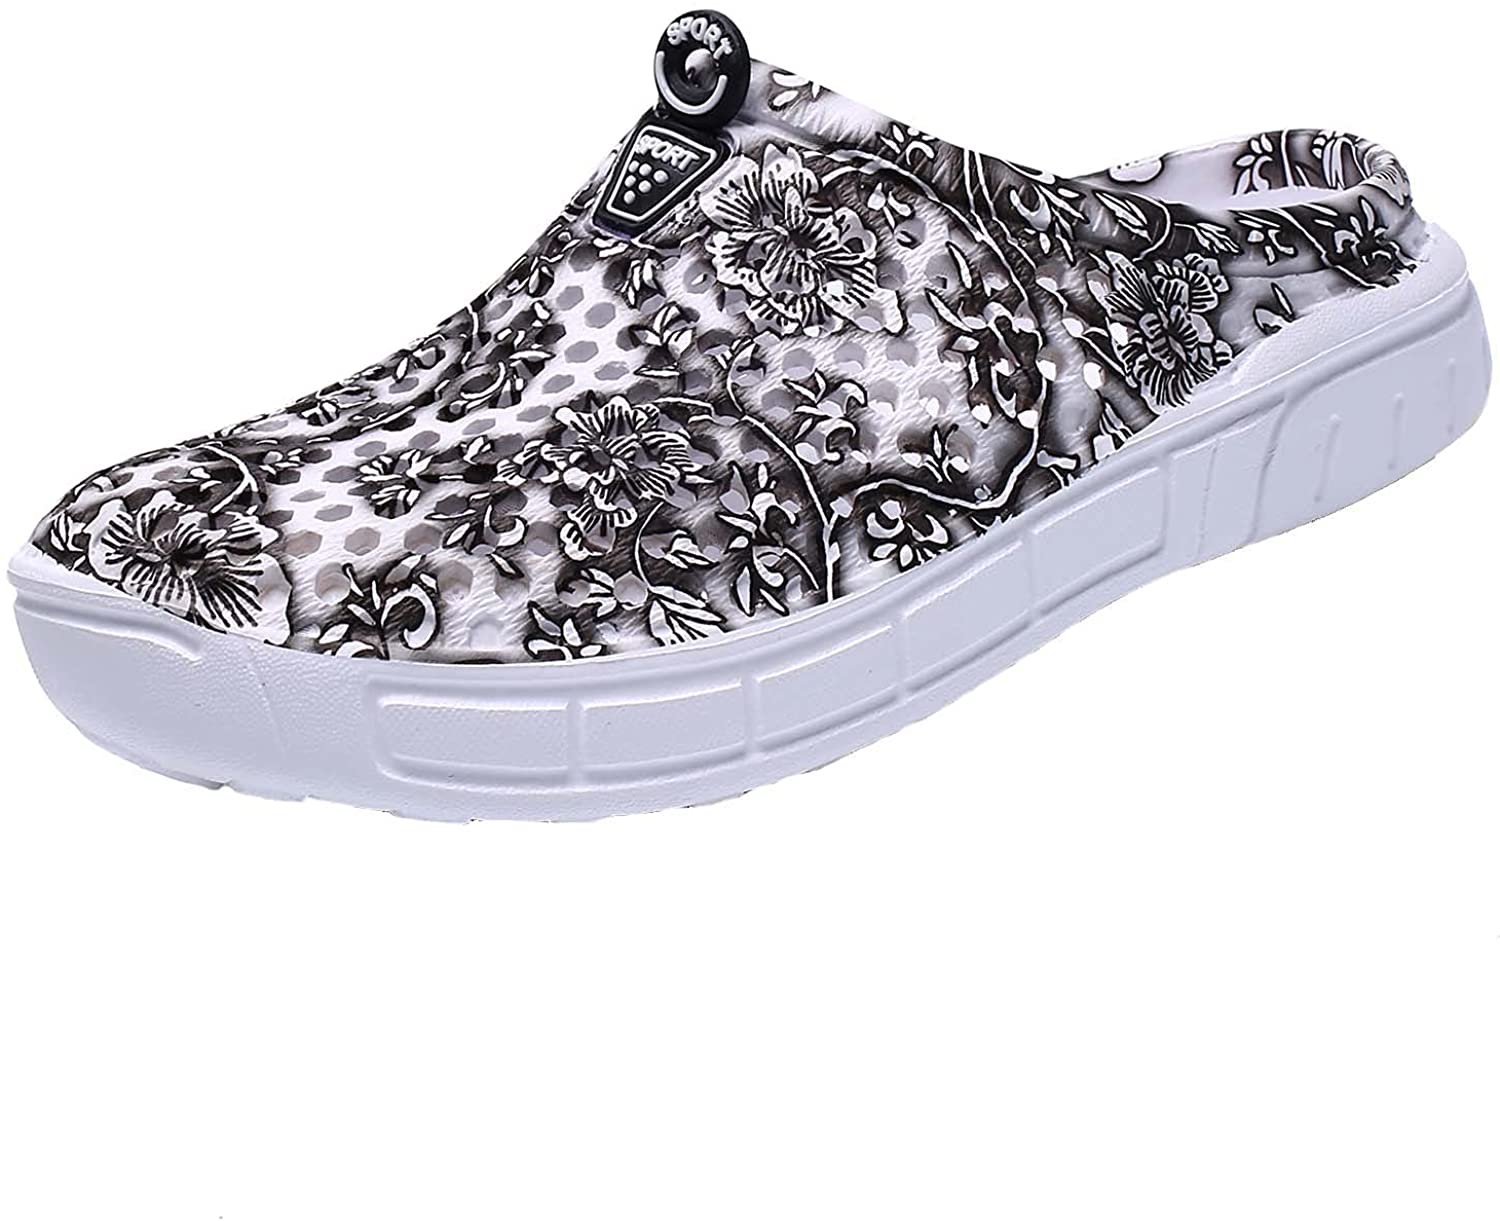 Women's Garden Clogs Shoes Casual Slipper Beach Sandals Anti-Slip Pool Water Shoes Home Slippers Summer Footwear 